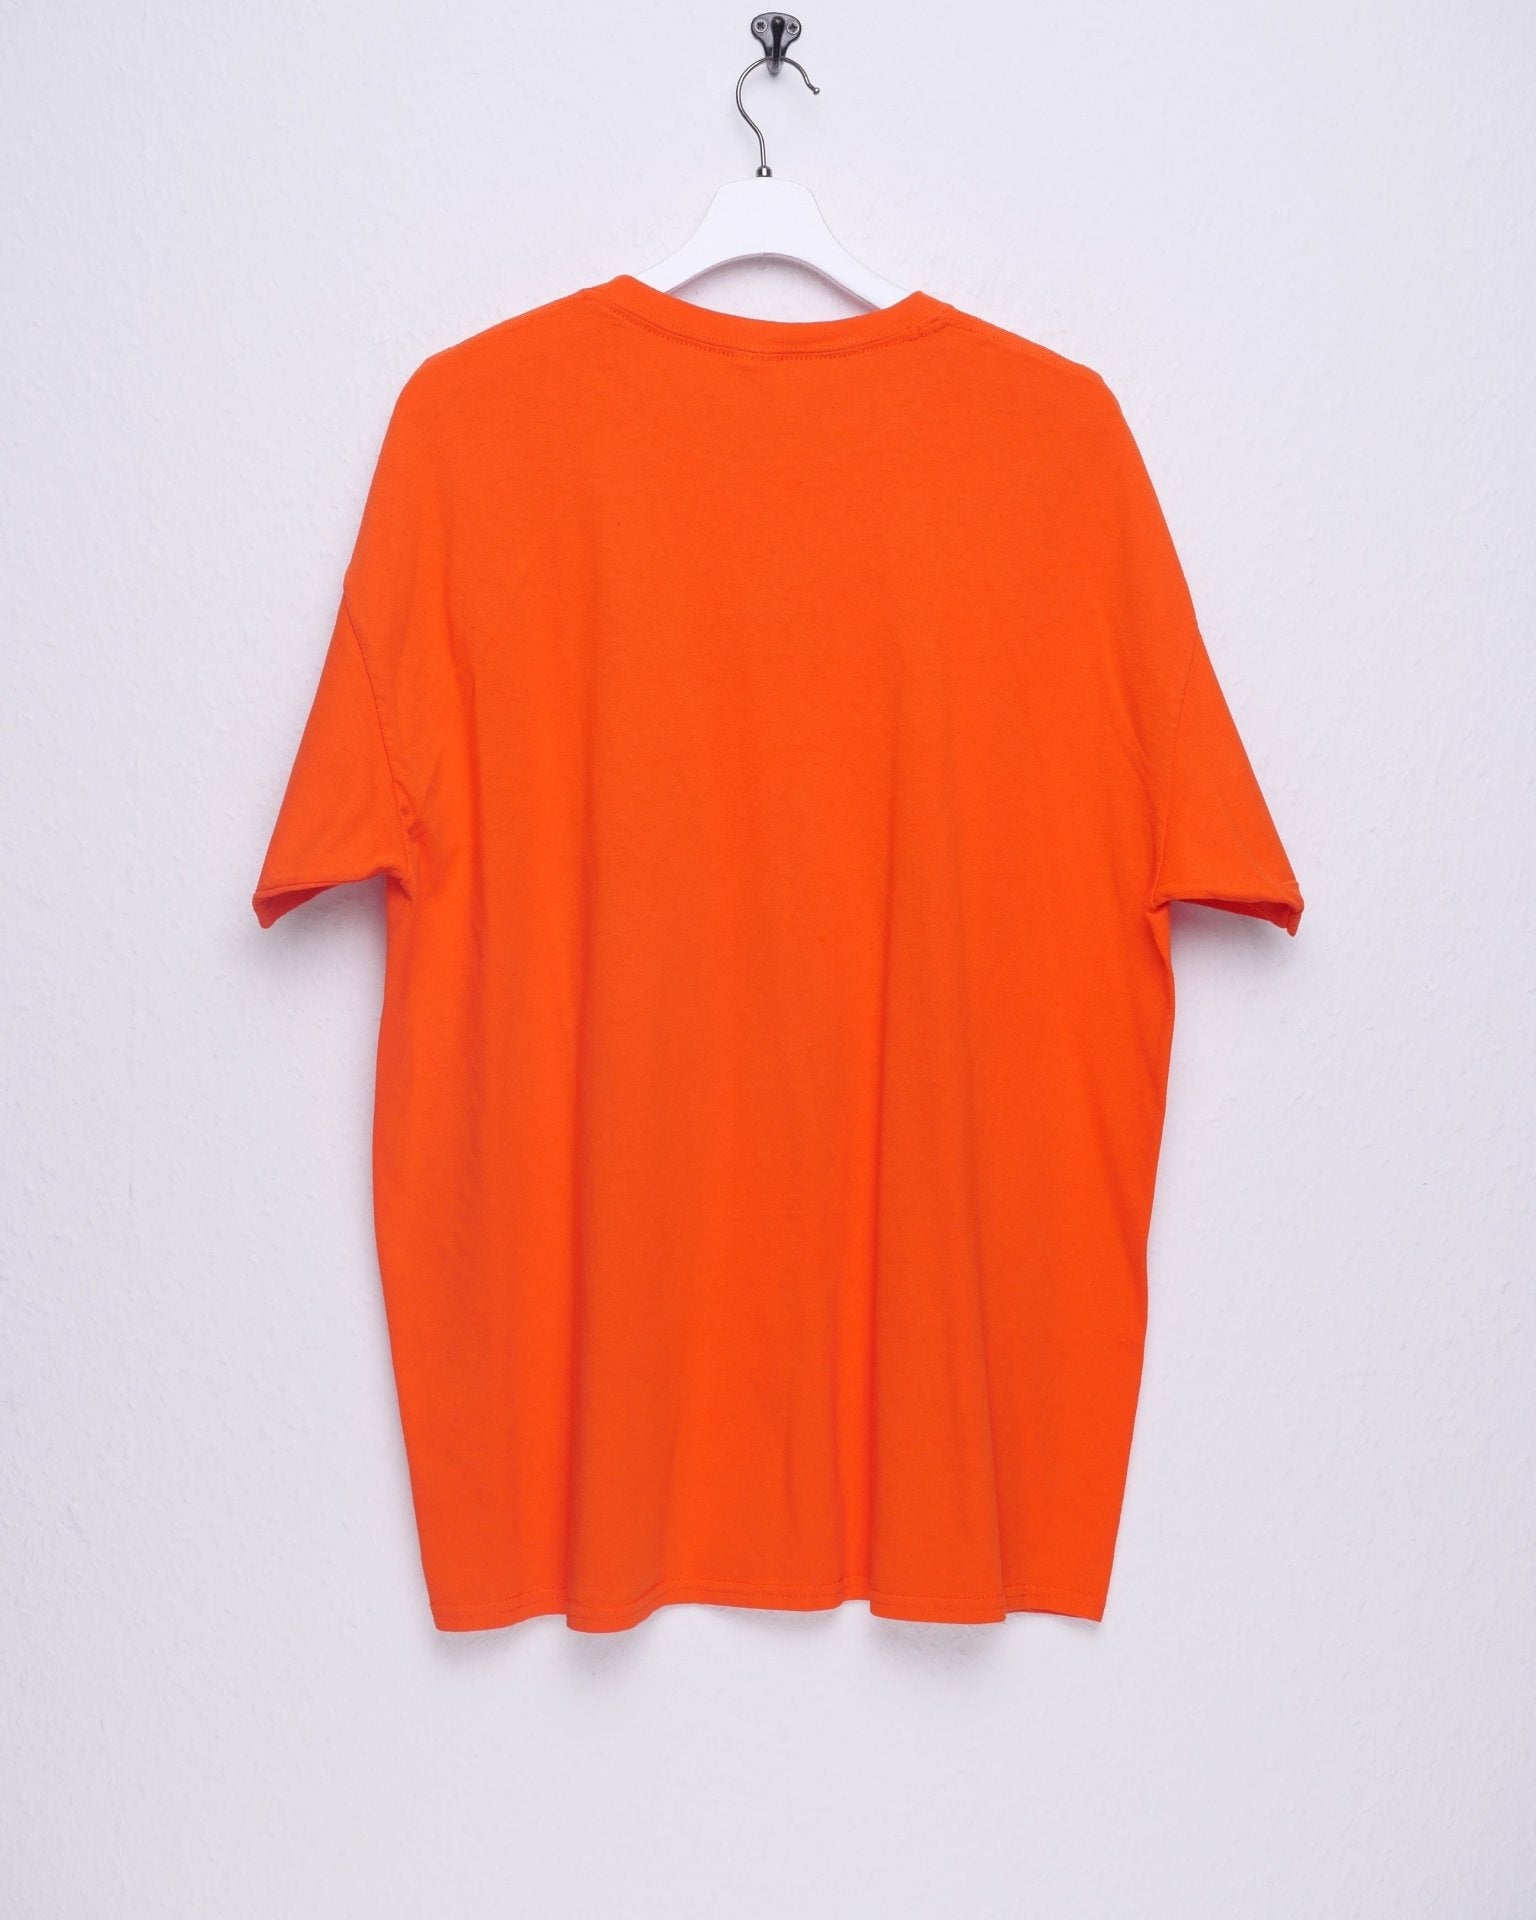 gildan printed Logo orange oversized Shirt - Peeces